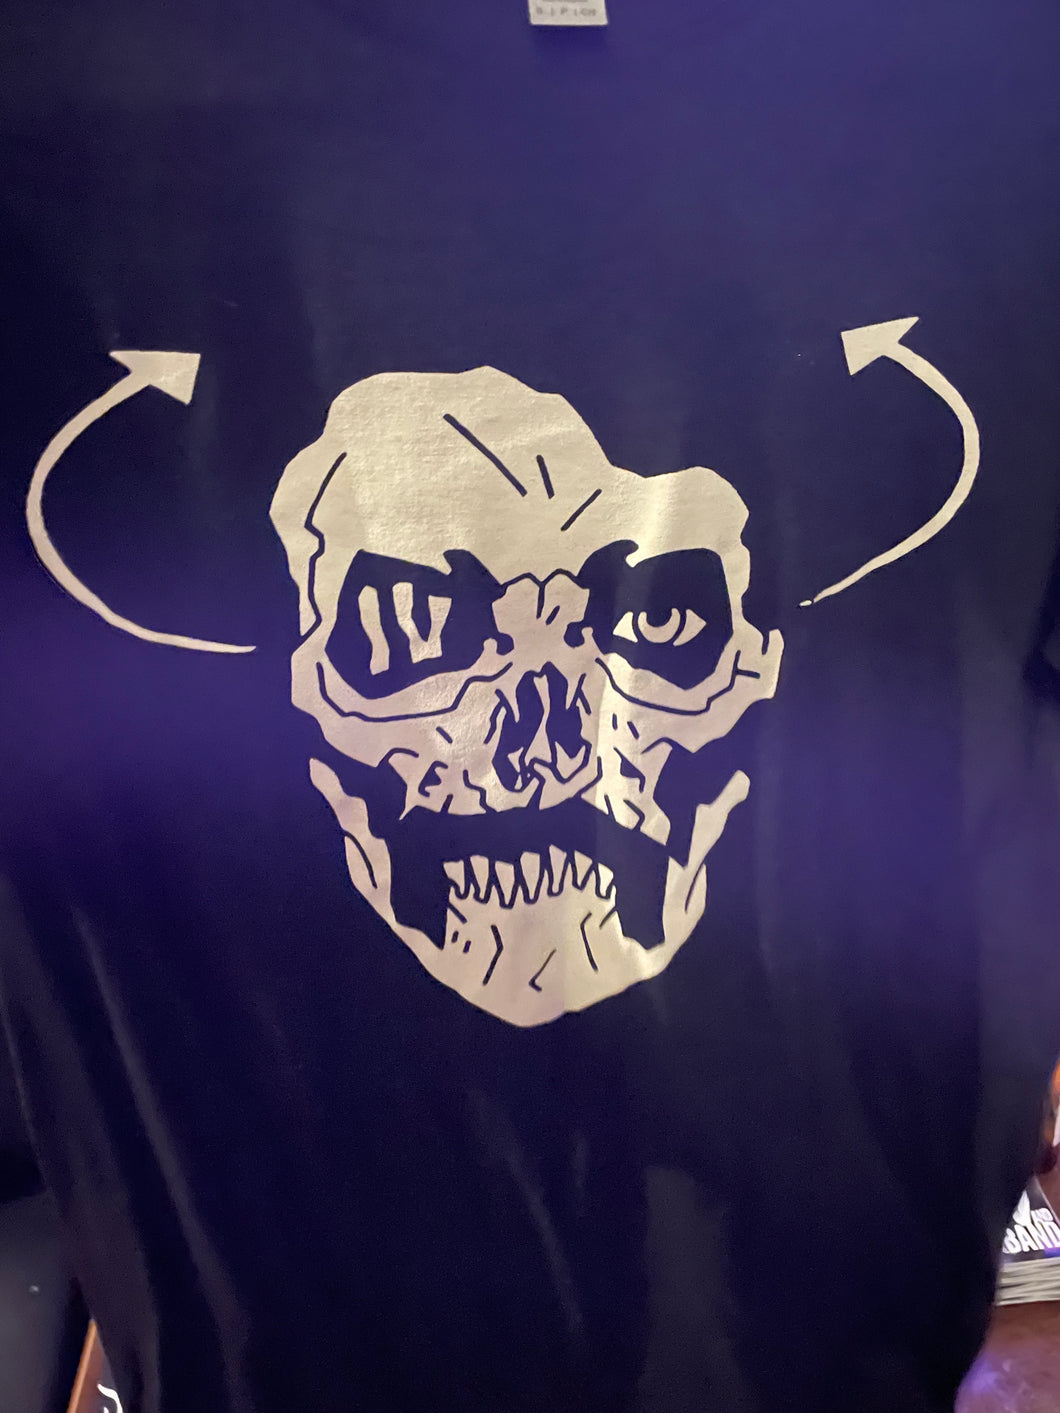 IV Skull shirt